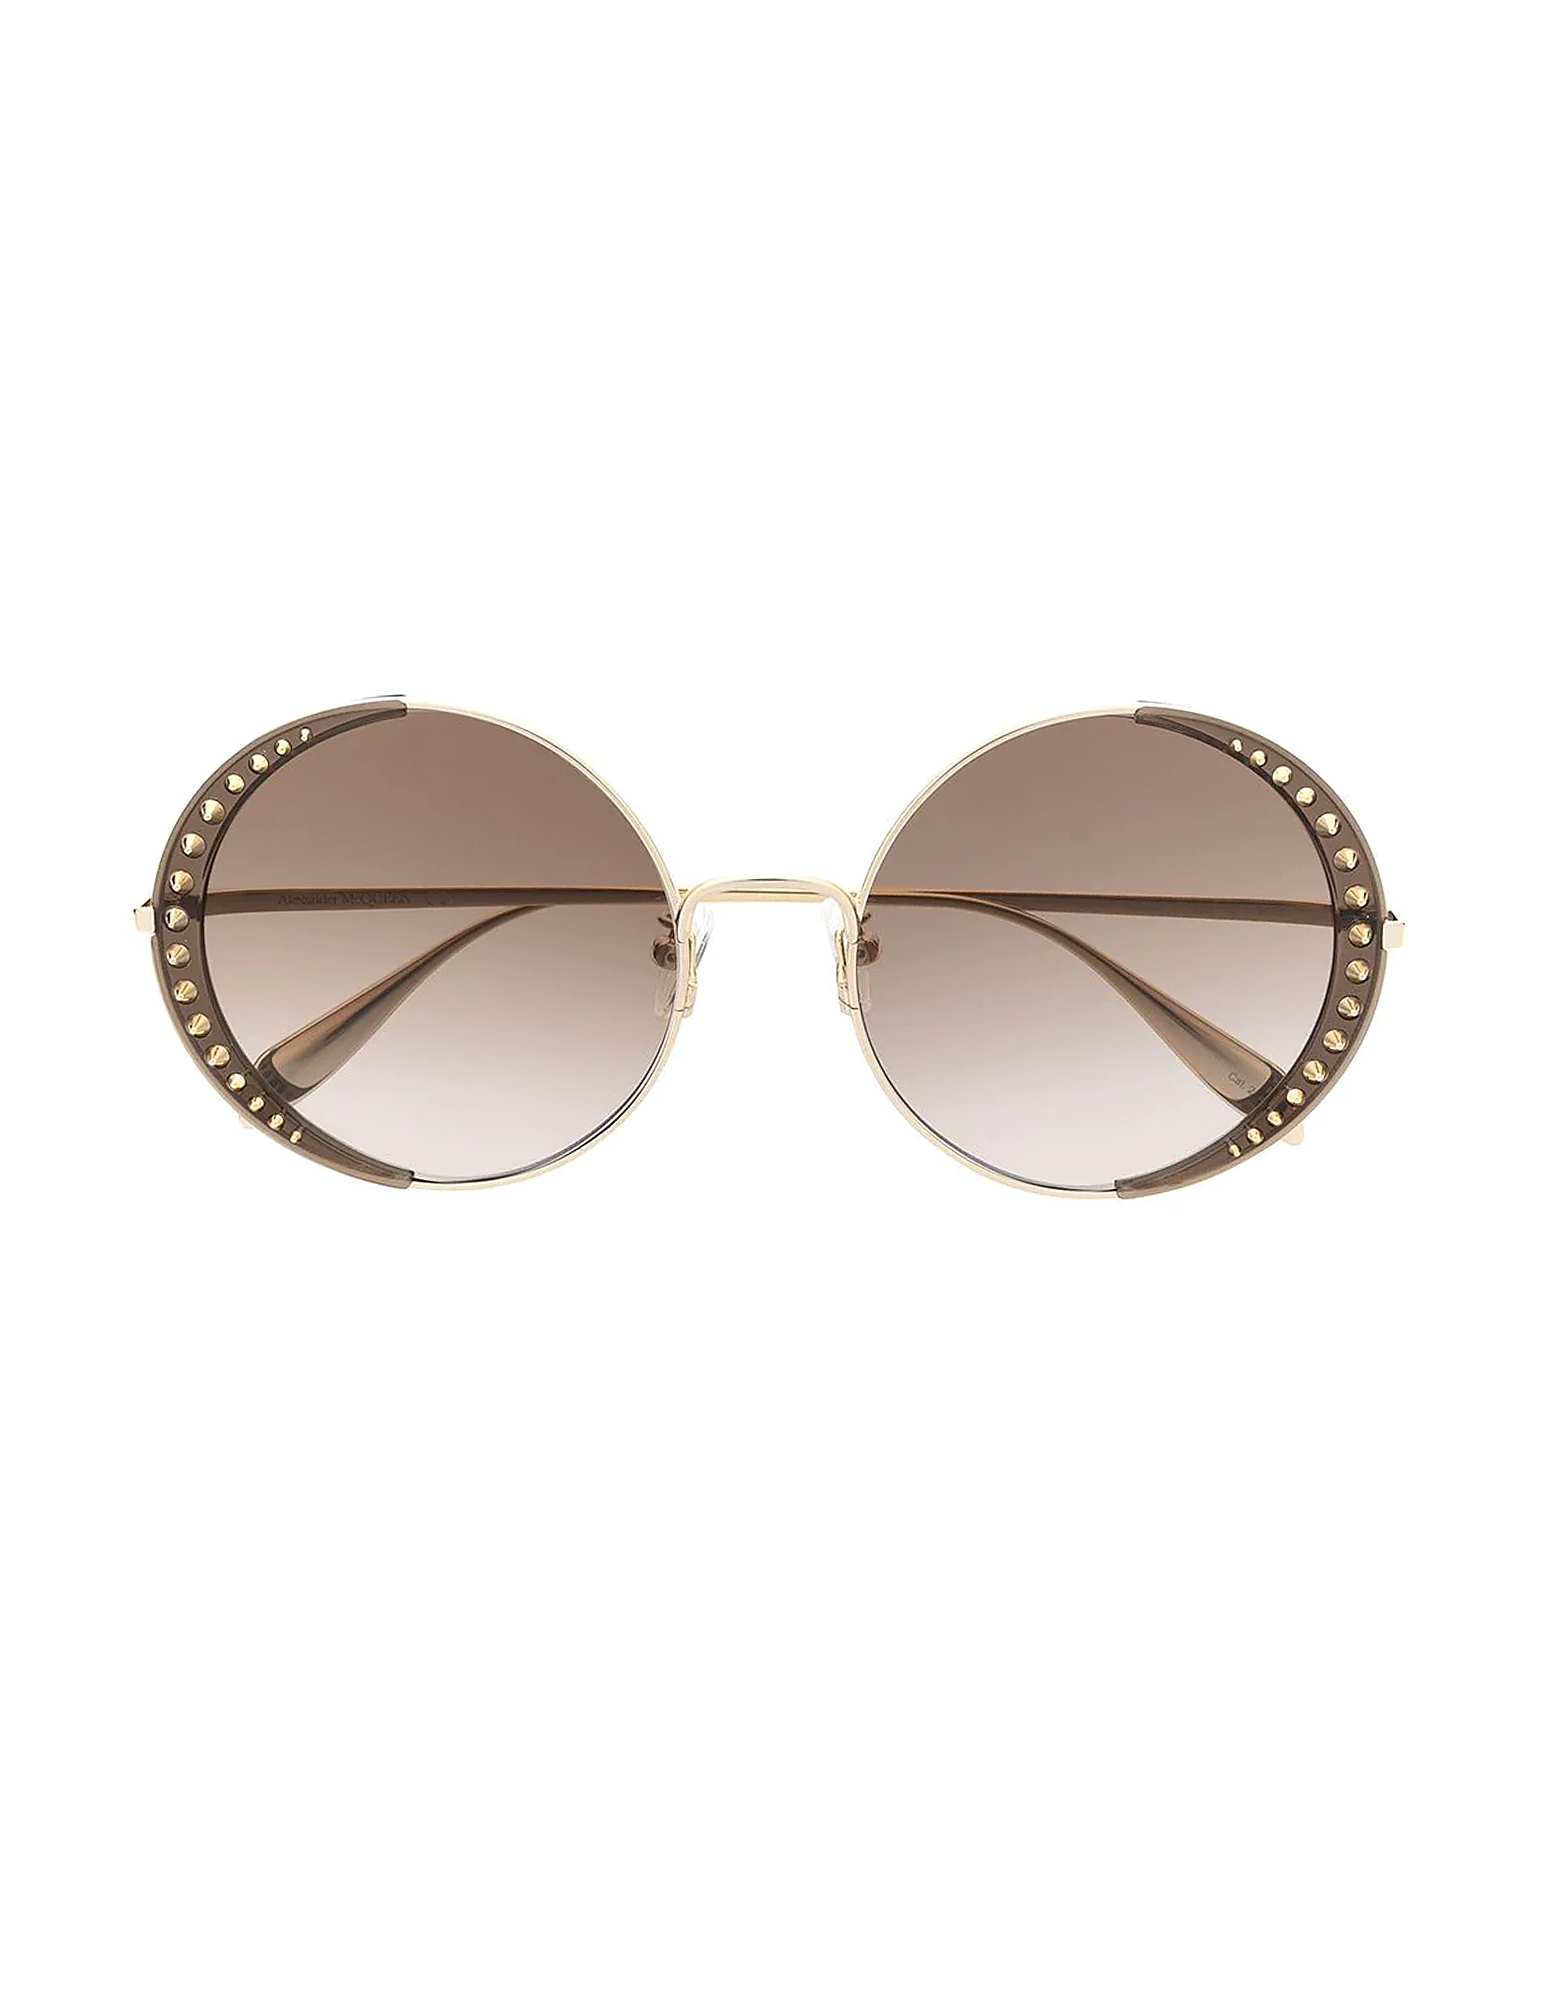 Alexander McQueen Sunglasses AM0311S Studded Metal Round Women's Sunglasses